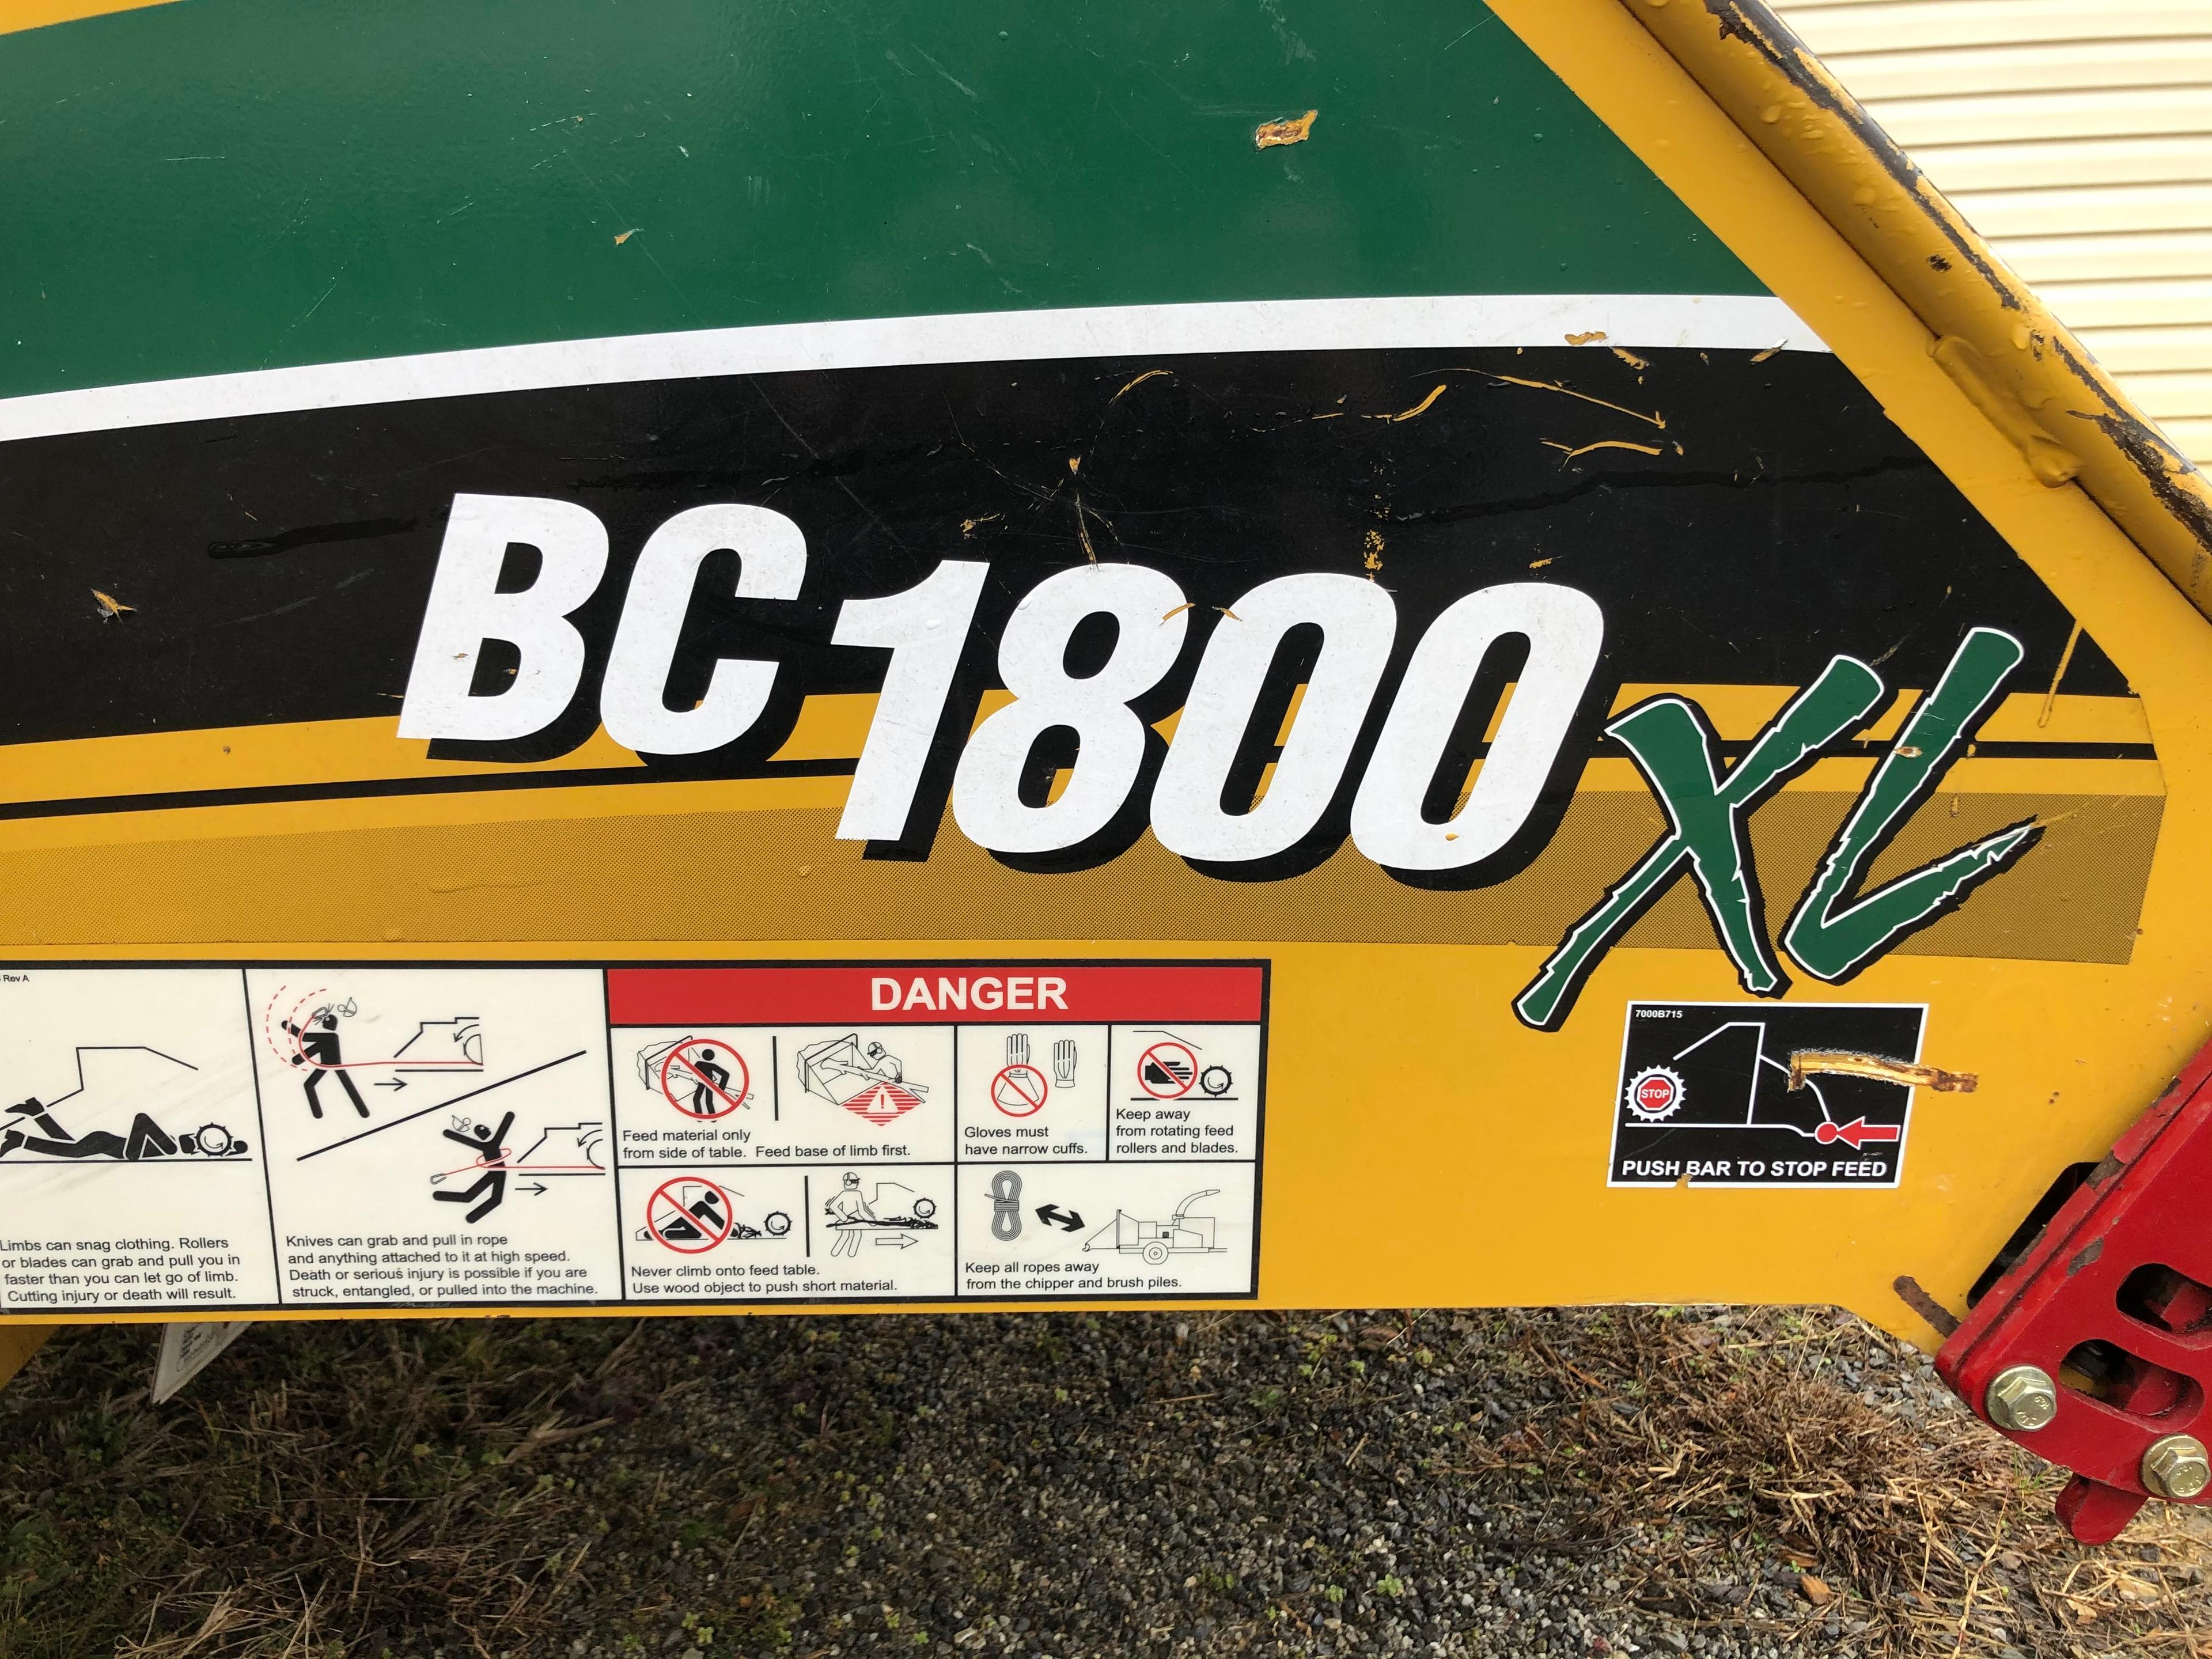 2019 VERMEER BC1800 XL WOOD CHIPPER